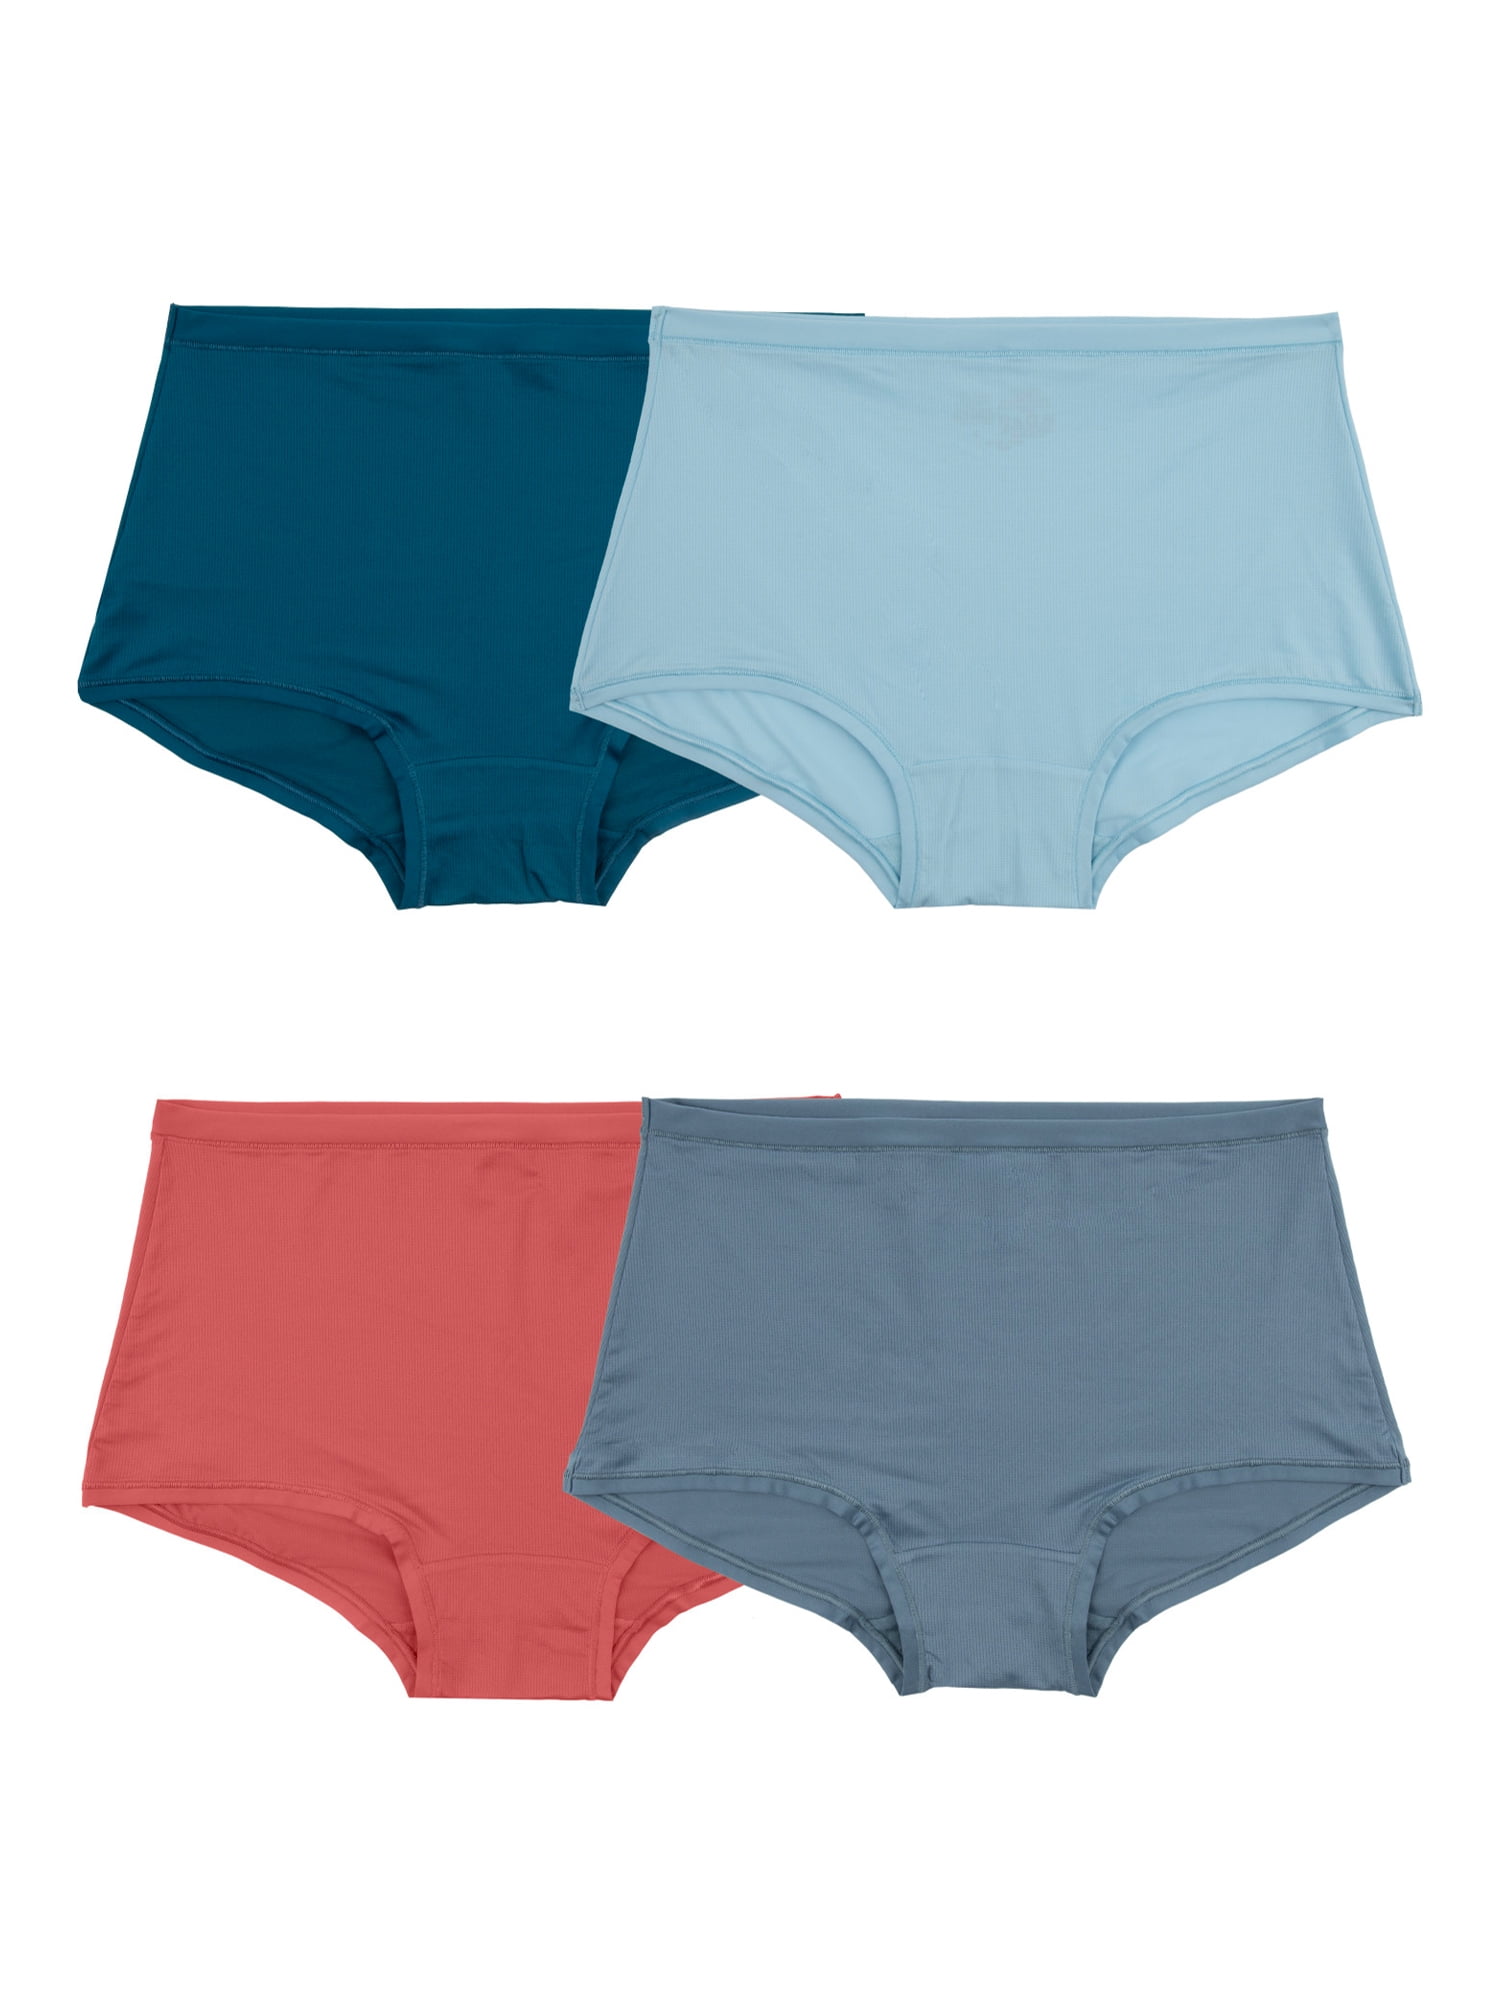 Maidenform Women Boy Short boy shorts panties 